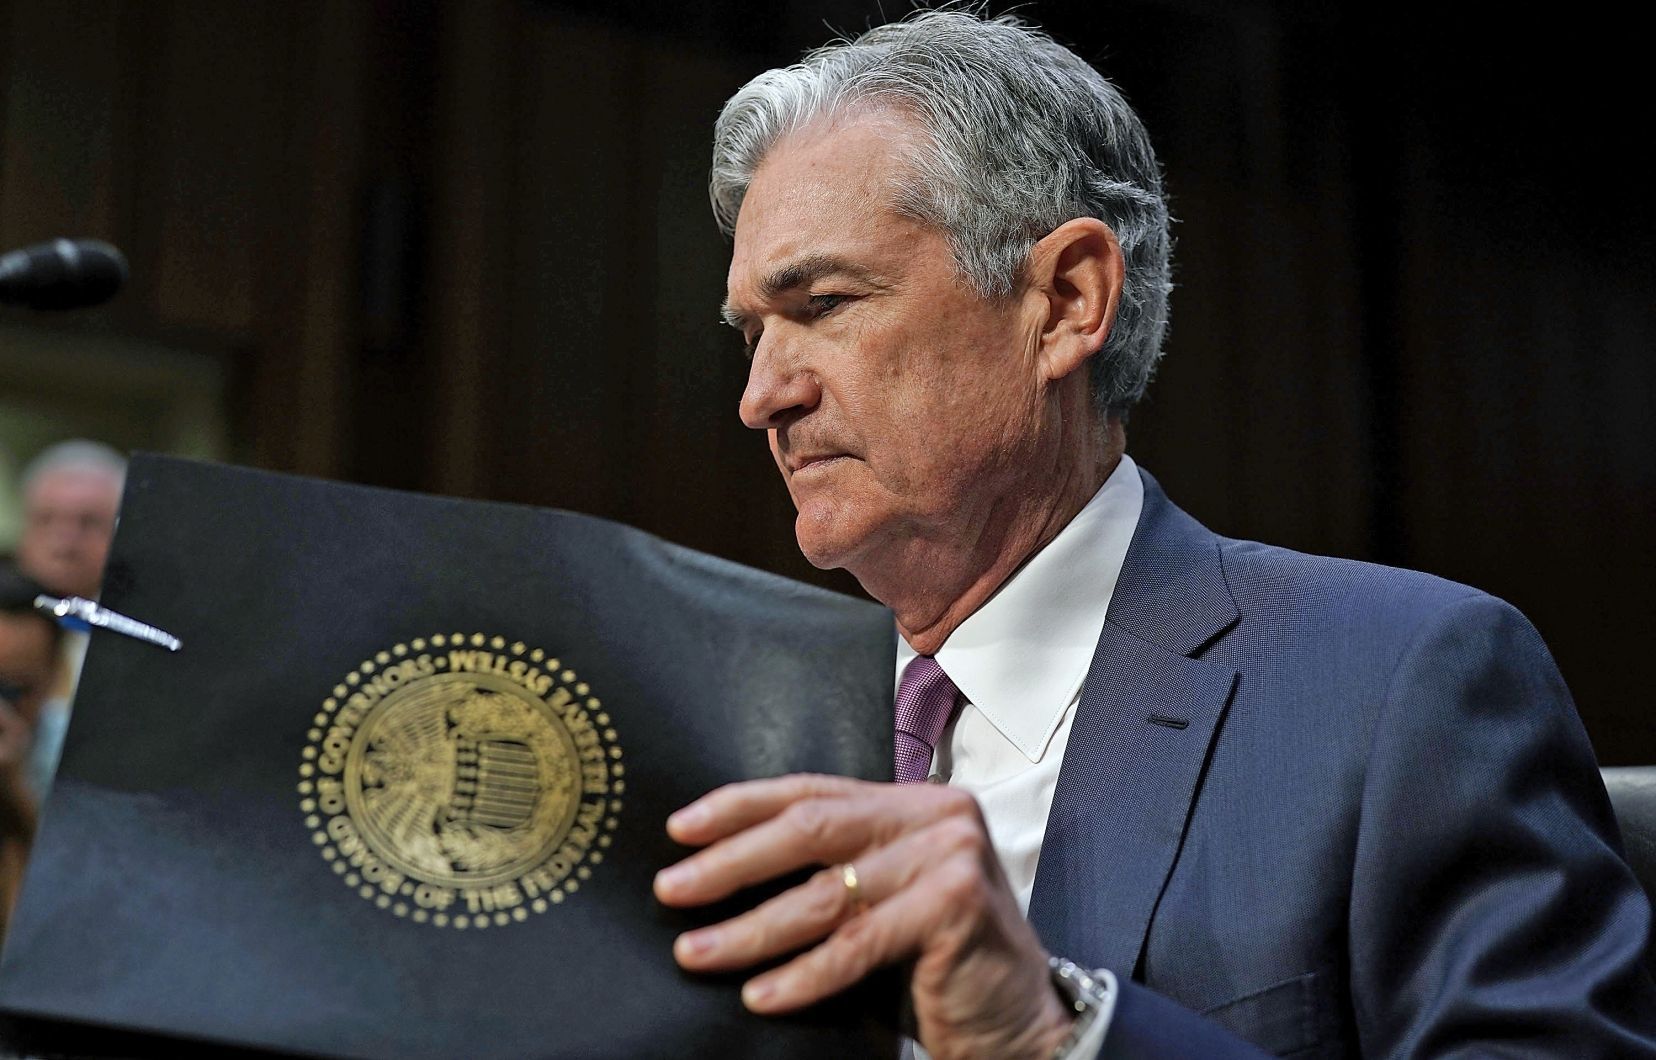 Fed chairman Jerome Powell